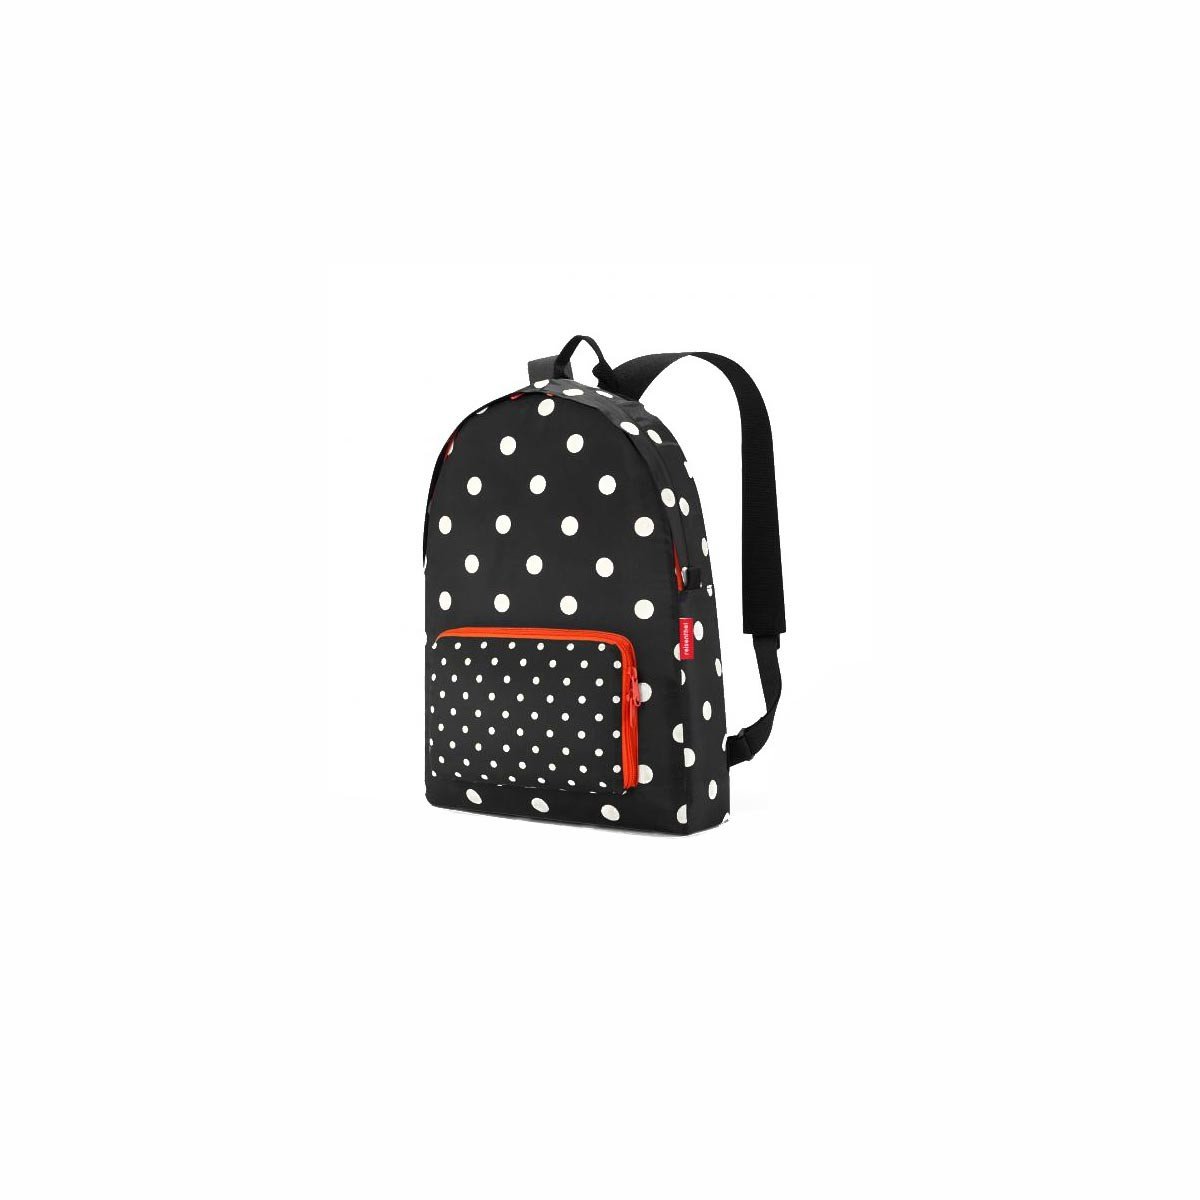 REISENTHEL Plecak Mini Maxi Rucksack w kropki czarno-czerwony AP7051